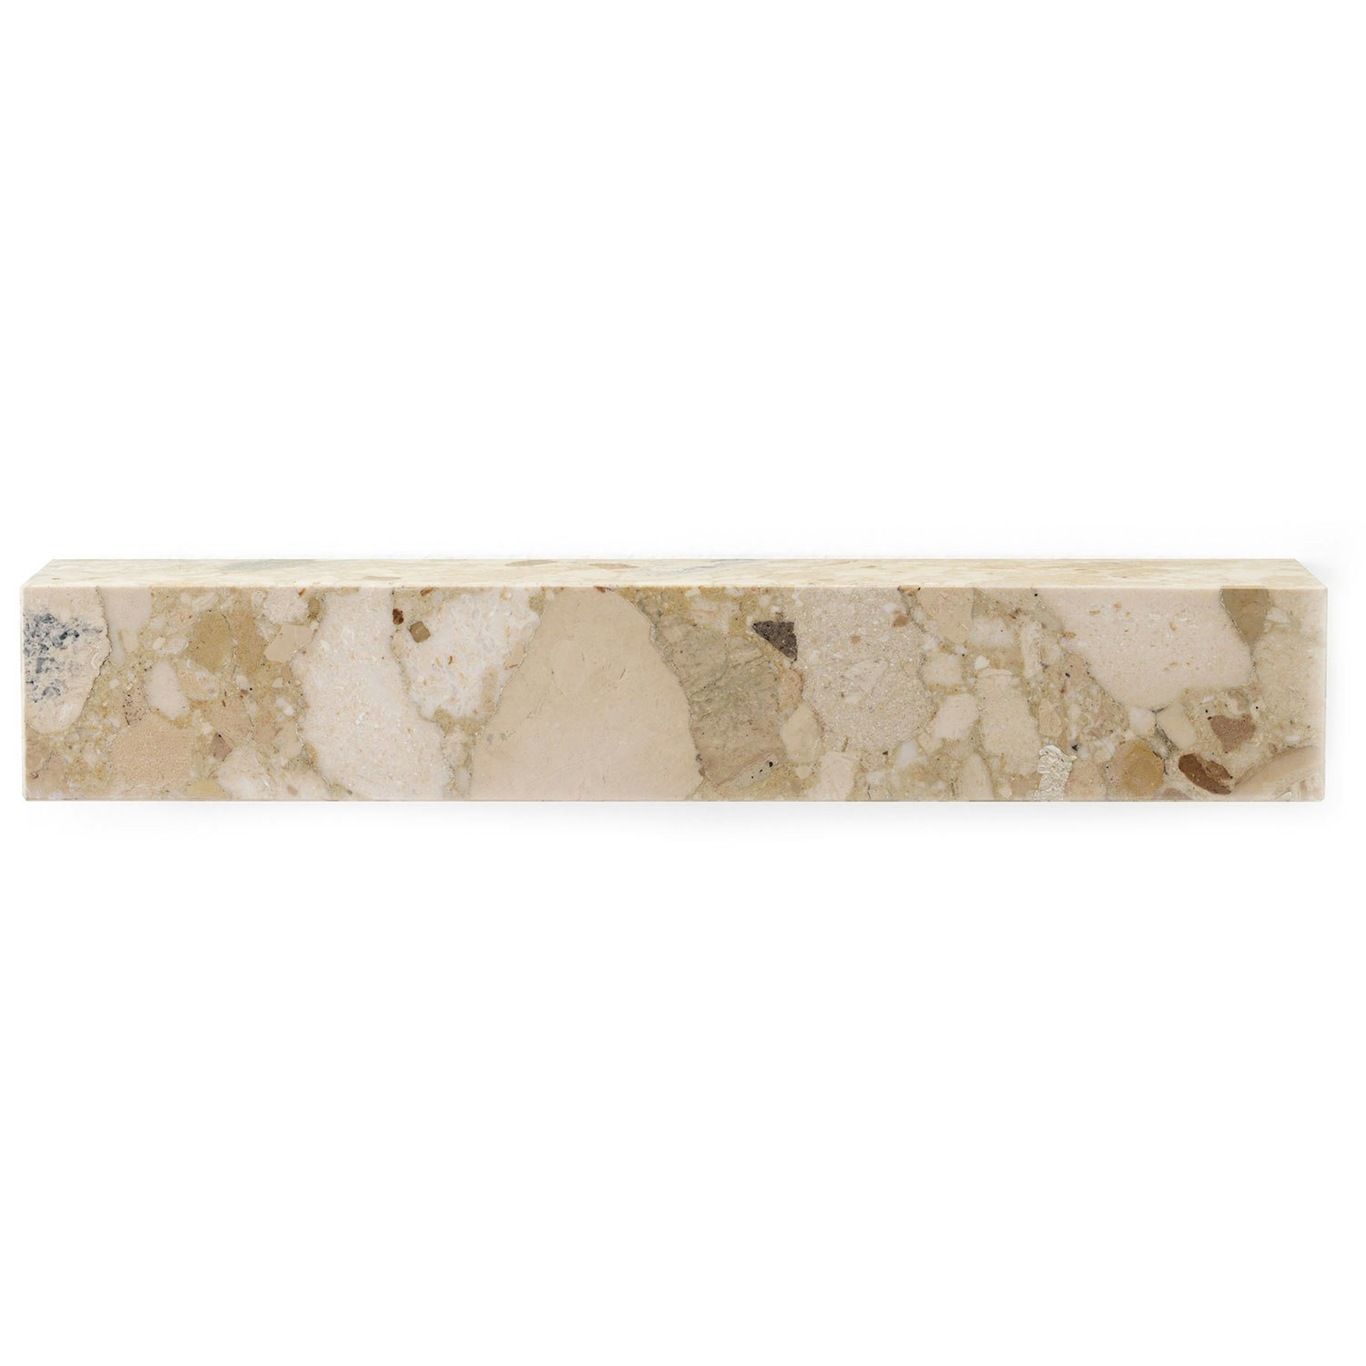 Plinth Shelf 60 cm, Kunis Breccia Marble